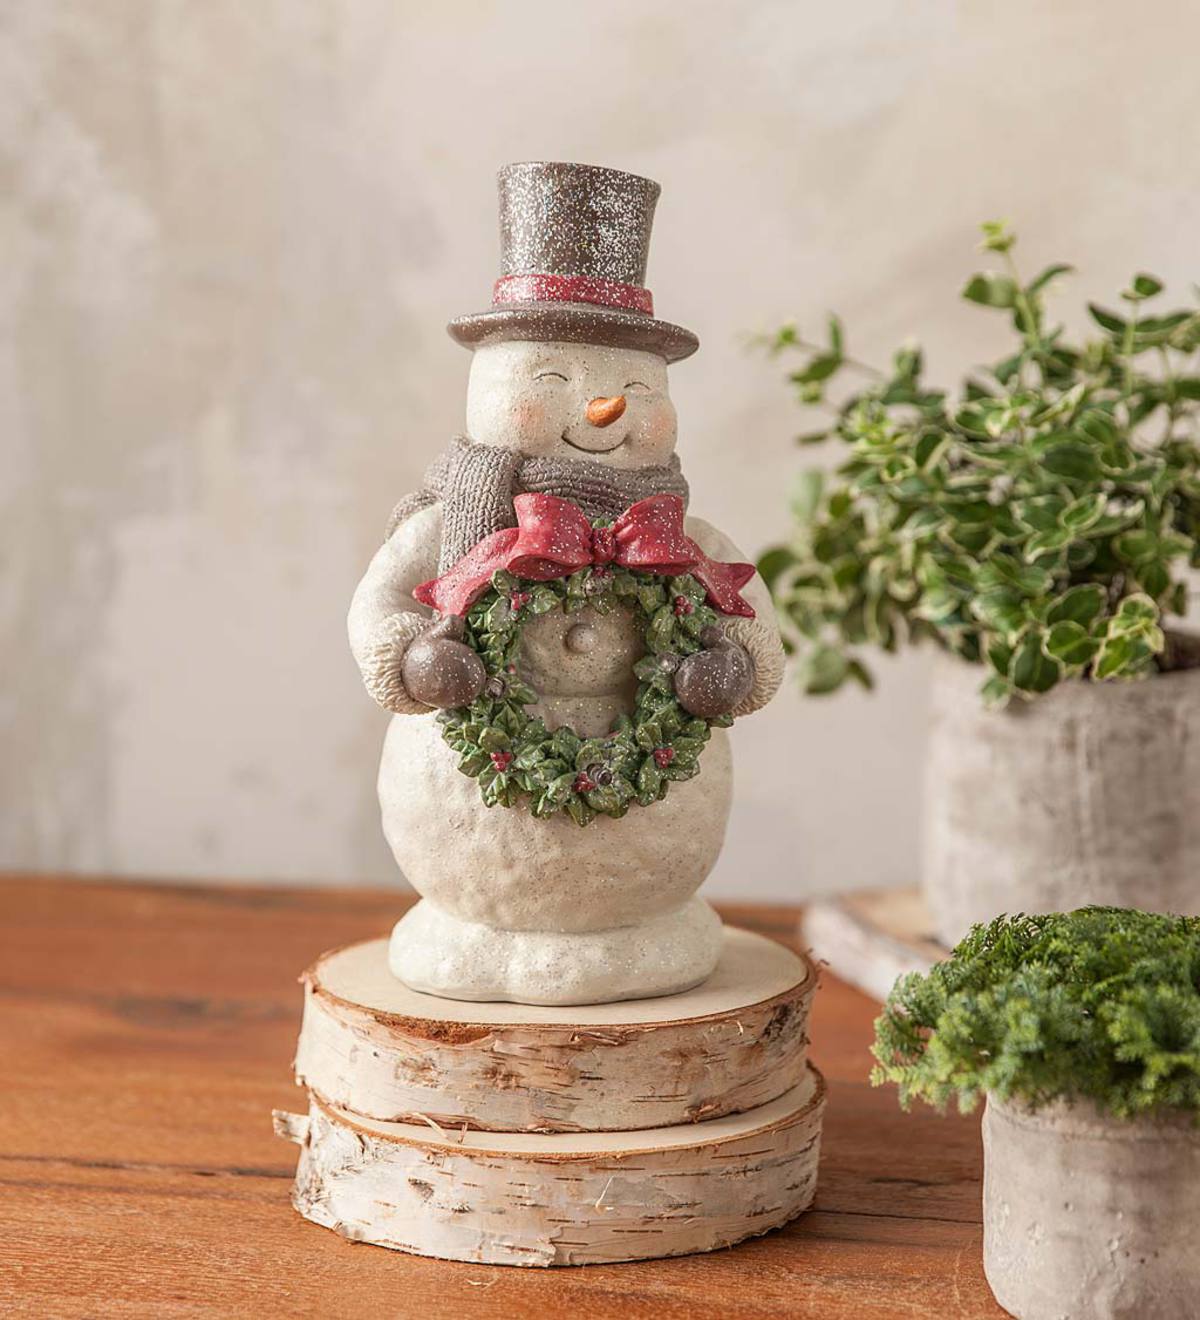 Snowman Figurine with Lighted Wreath